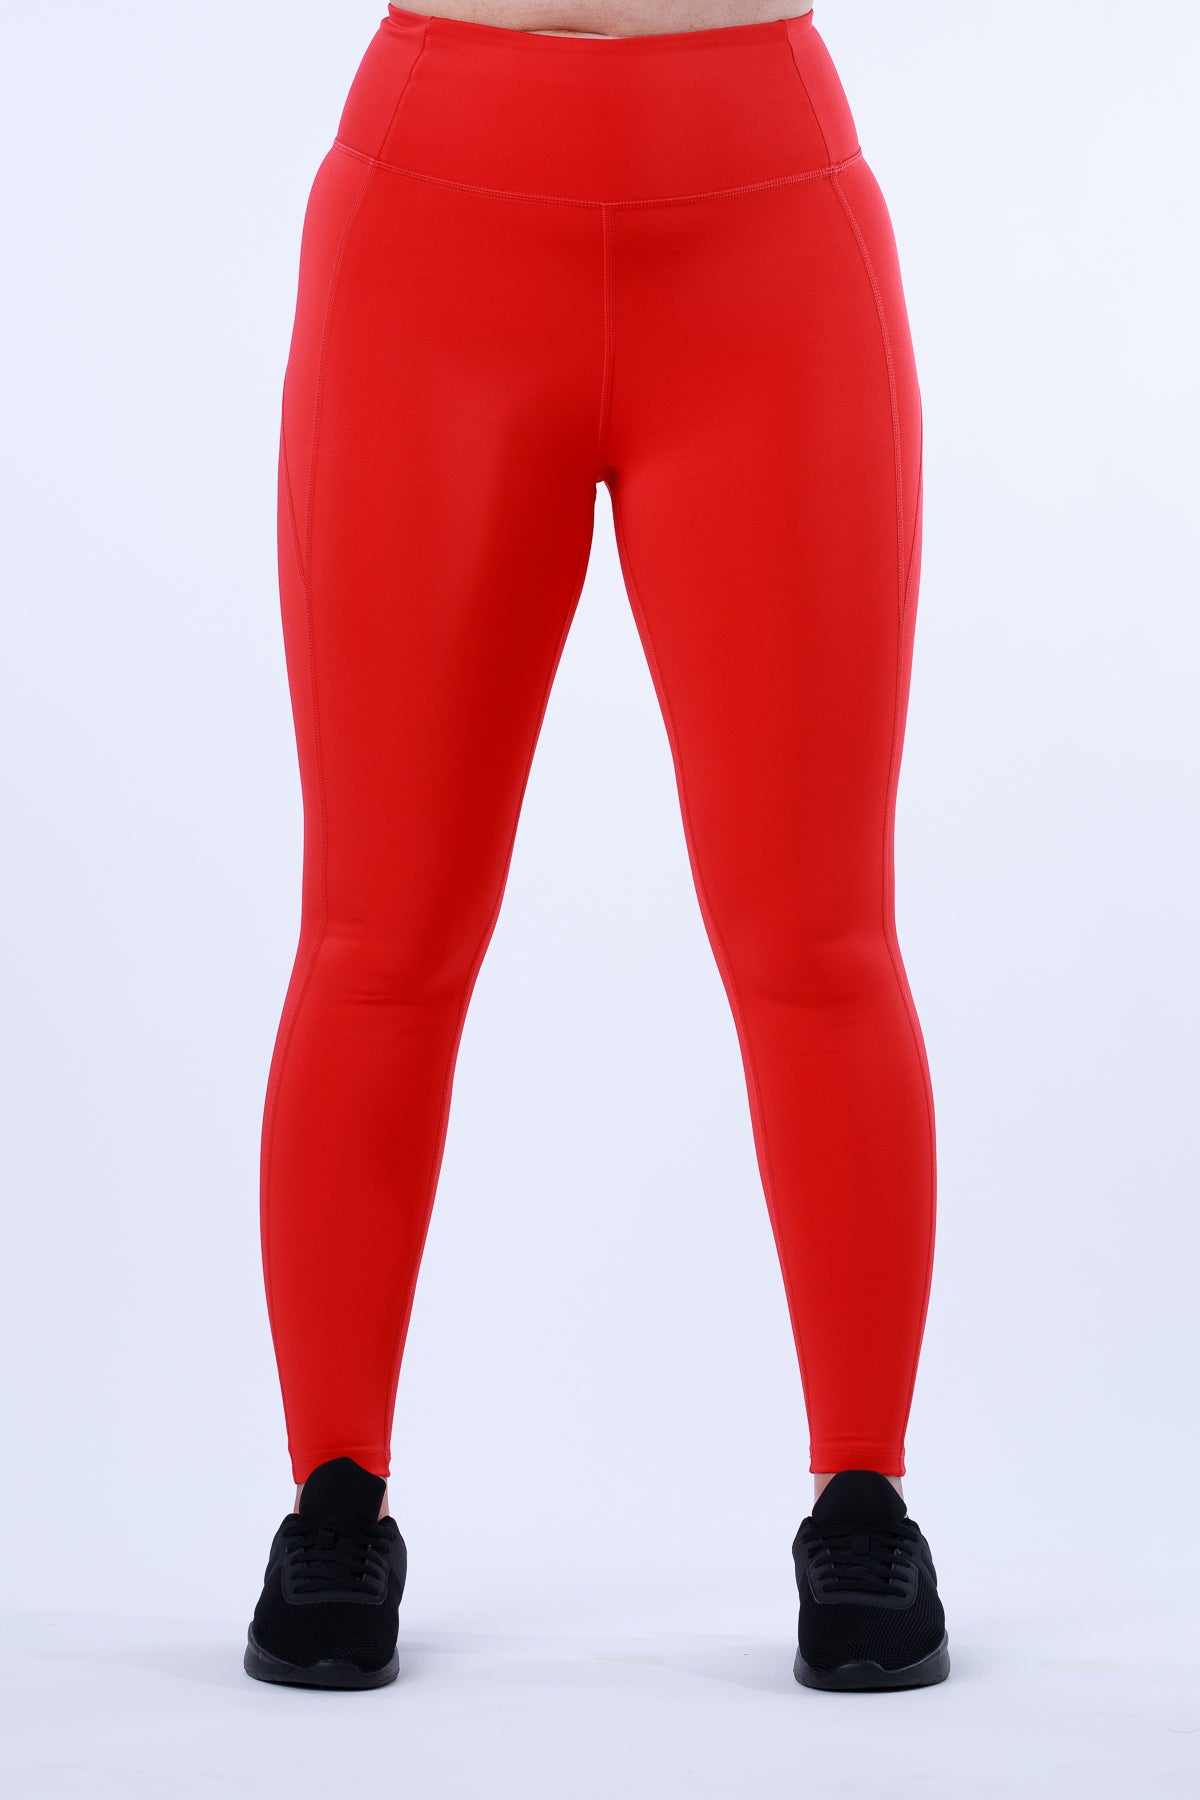 Prisma Full Length Red - M, Red at Rs 190, Women Leggings, Stretchable  Legging, Pants Leggings, Tights For Gym, Active Leggings - Villows  Shopping, Dindigul